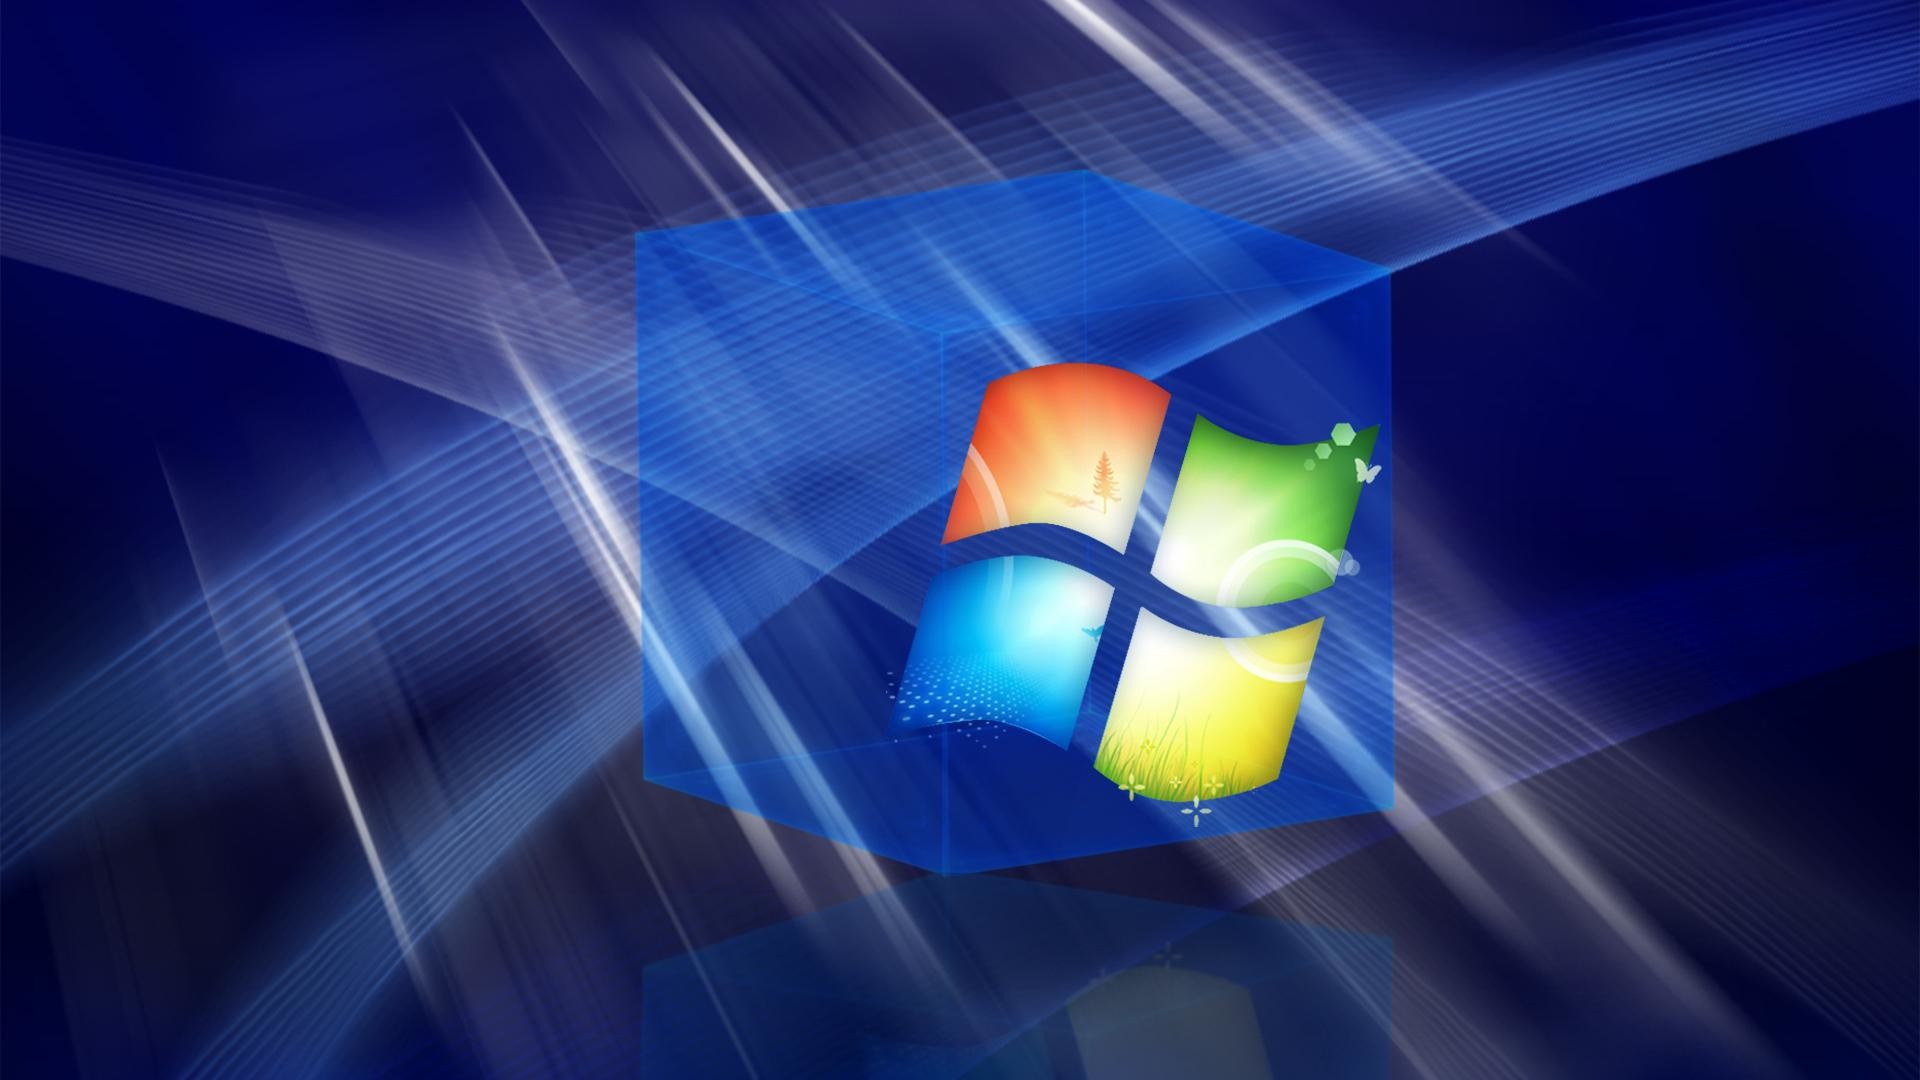 1920x1080  Hd 3d Blue Windows Cube desktop backgrounds wide wallpapers :1280x800,1440x900,1680x1050